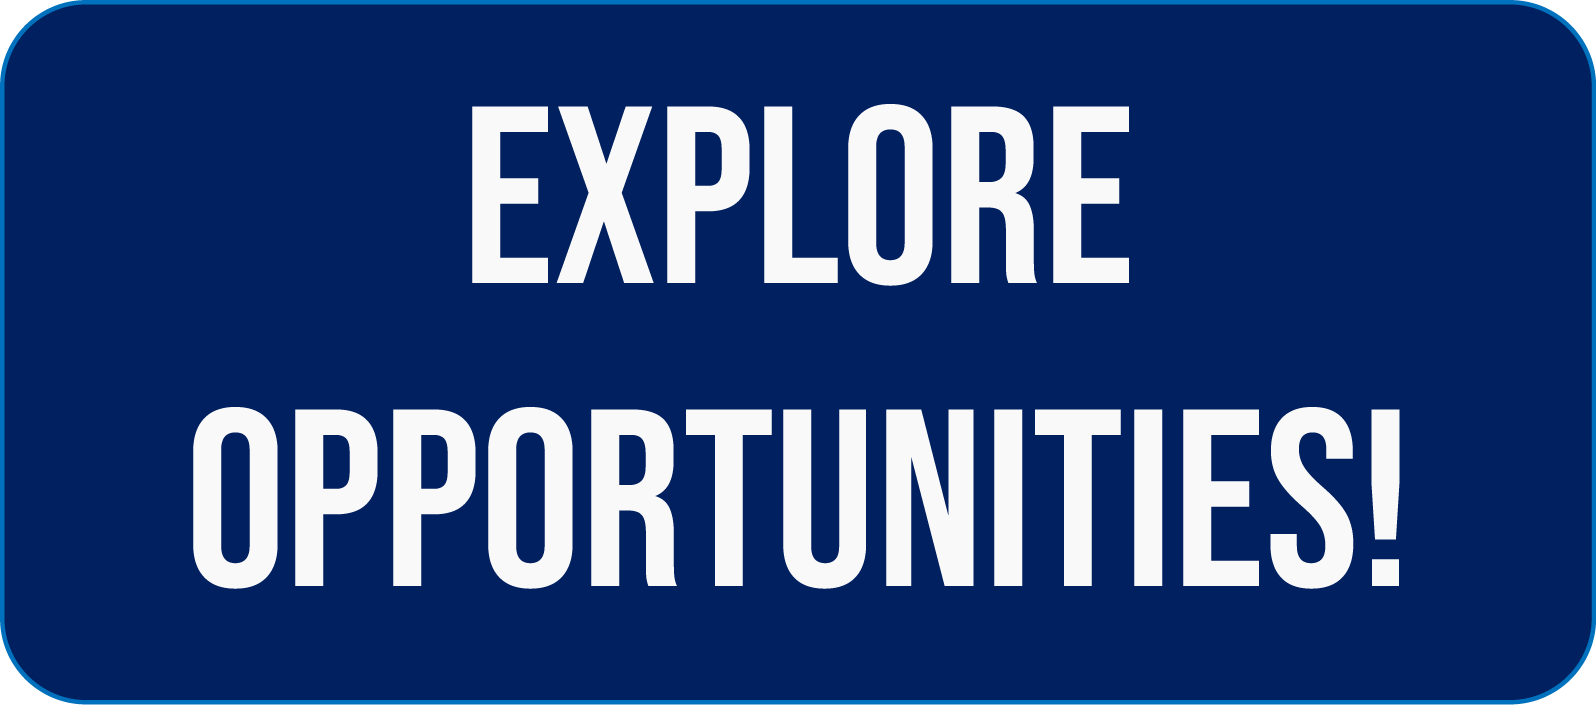 Explore Opportunities! 